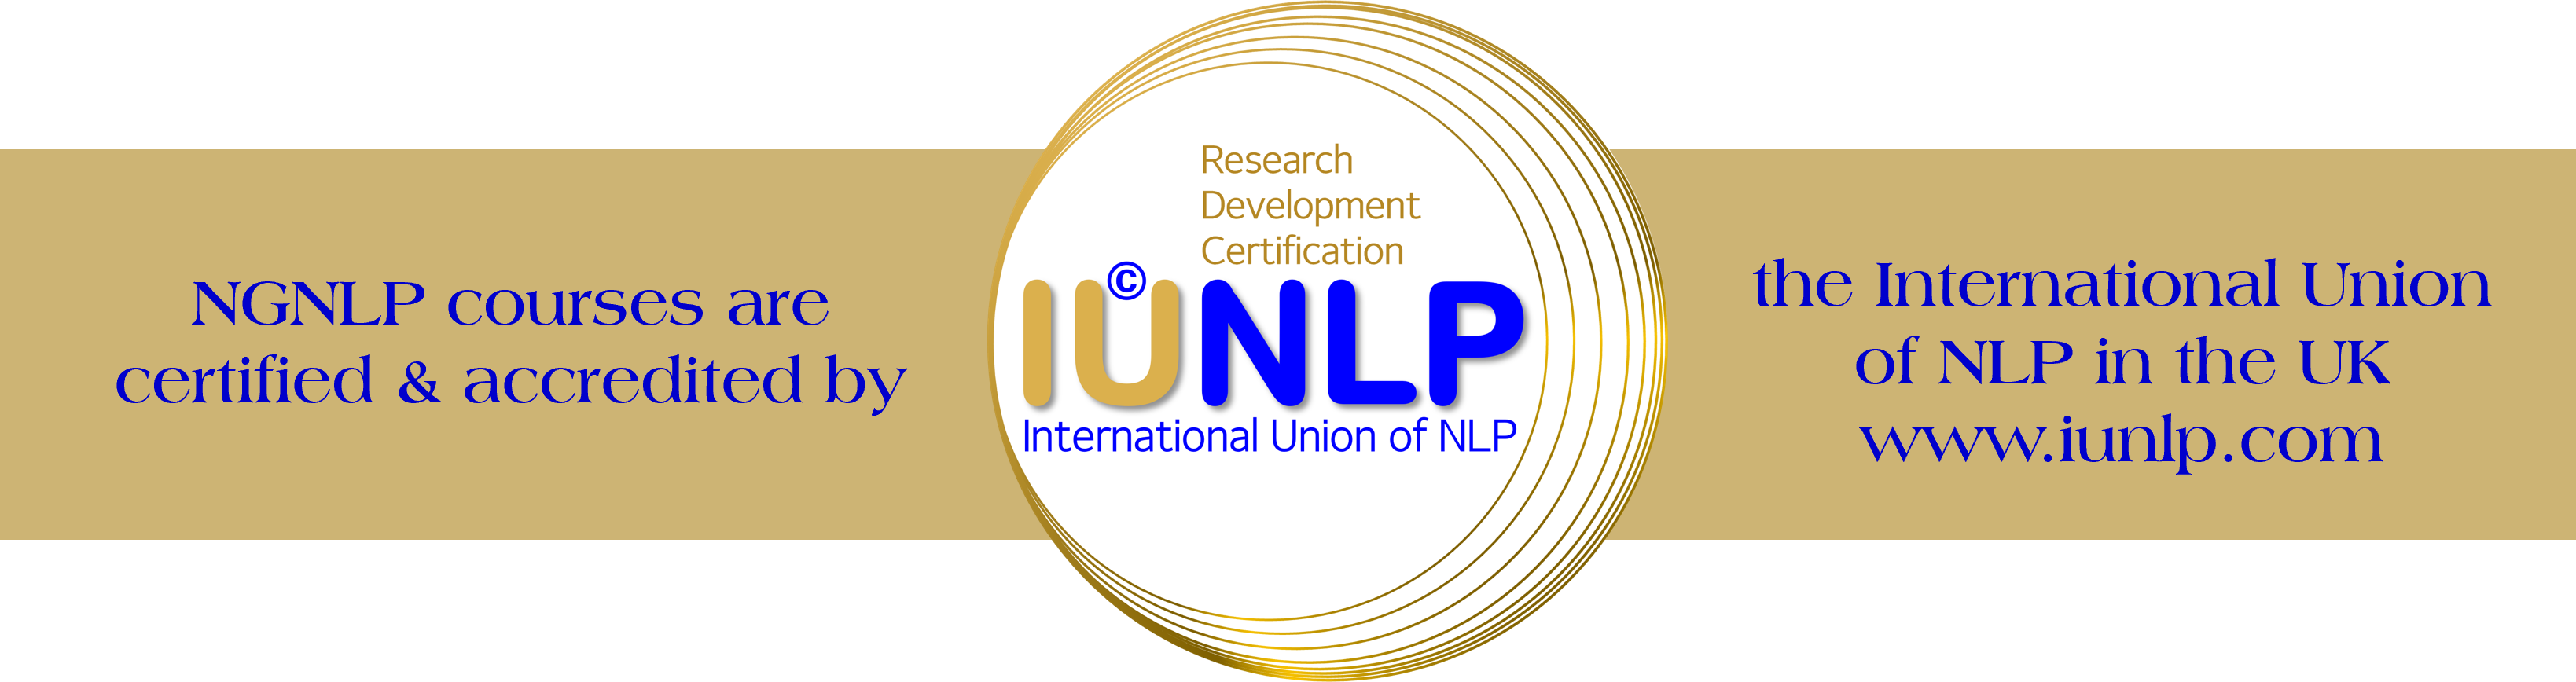 iunlp banner the new generation of nlp